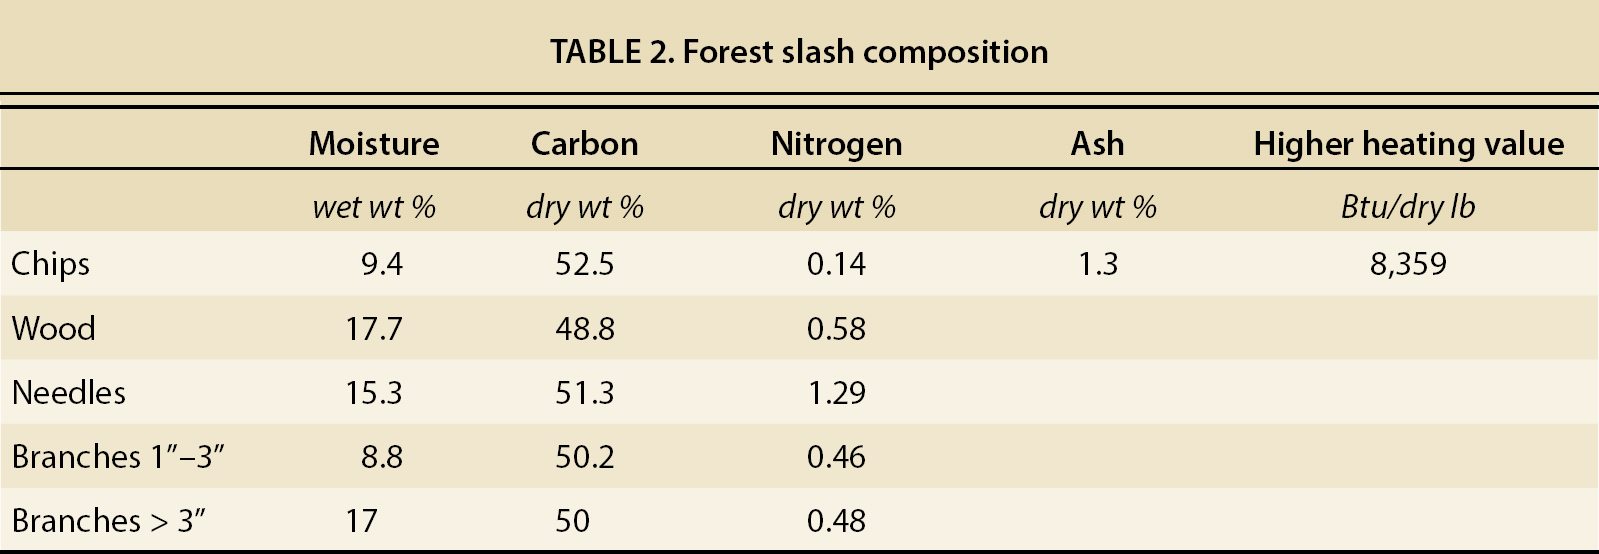 Forest slash composition